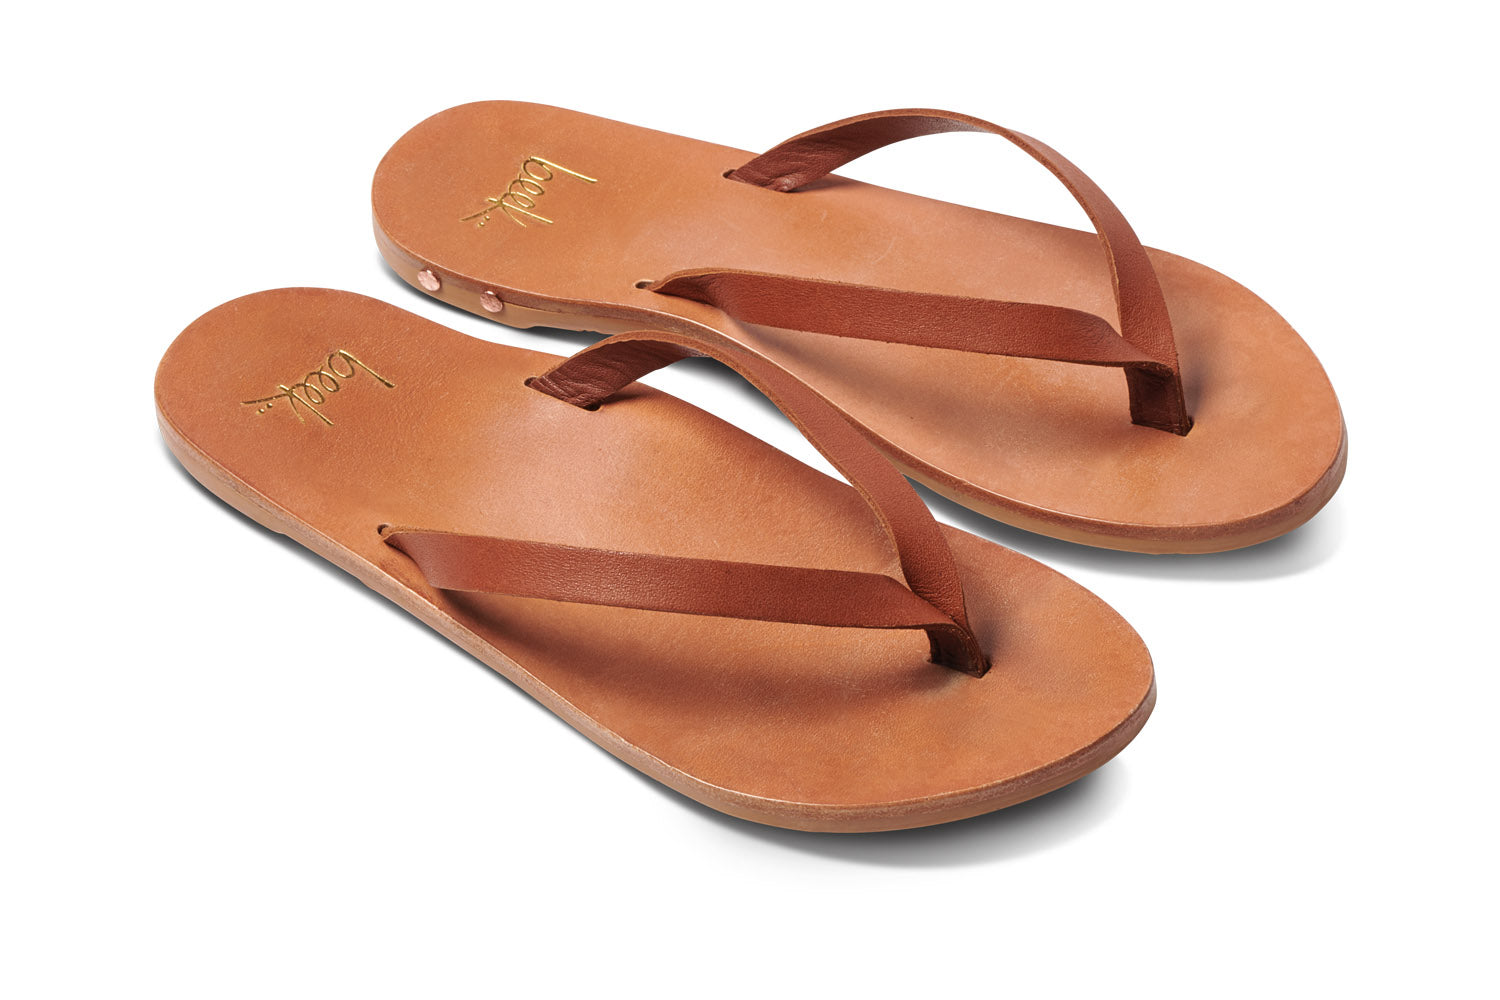 SEABIRD Tan/Tan Leather Thong Sandal